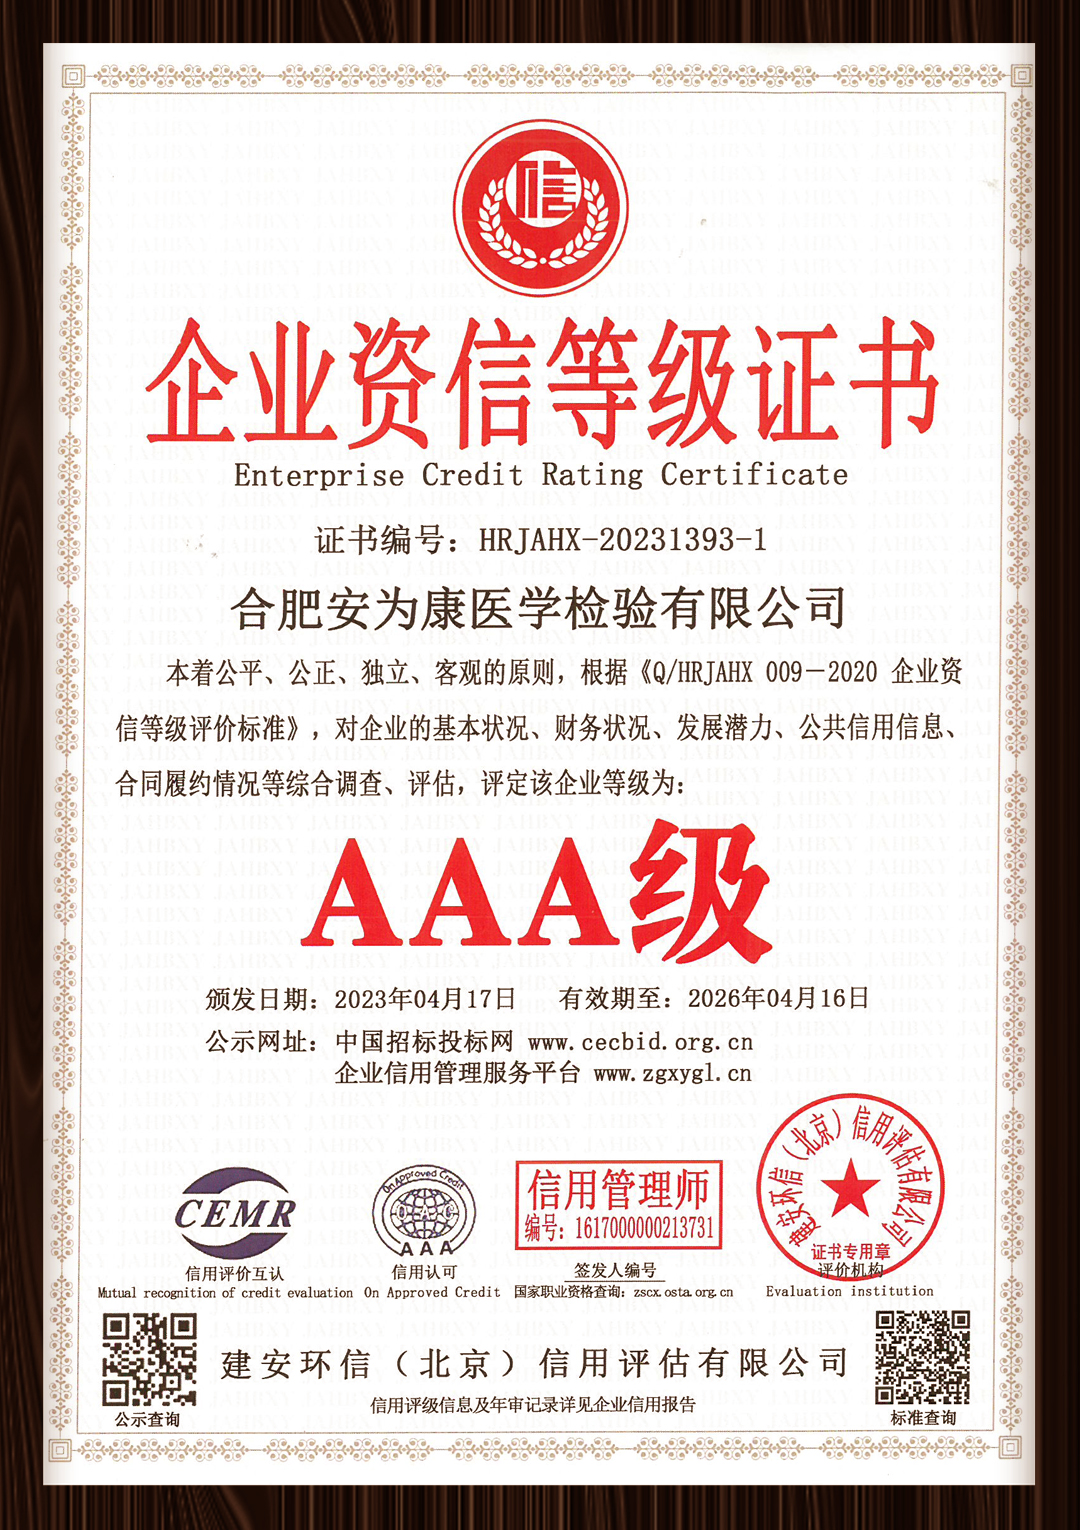 AAA企业资信登记证书